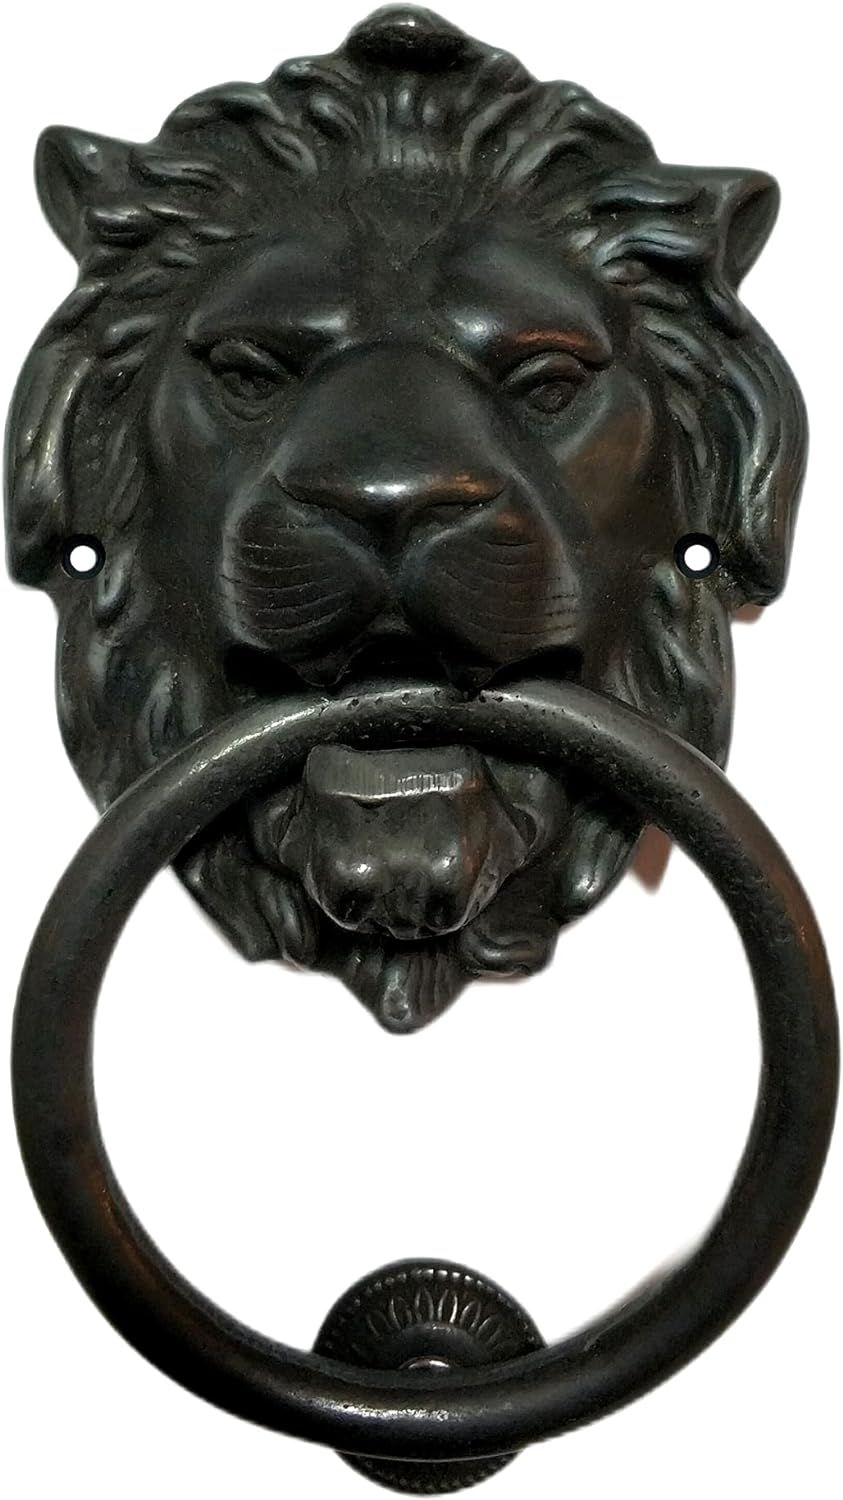 Qparts Regency Lions Head Door Knocker,Solid Brass,H:7 inch,Black,Oxide Finish | Amazon (US)